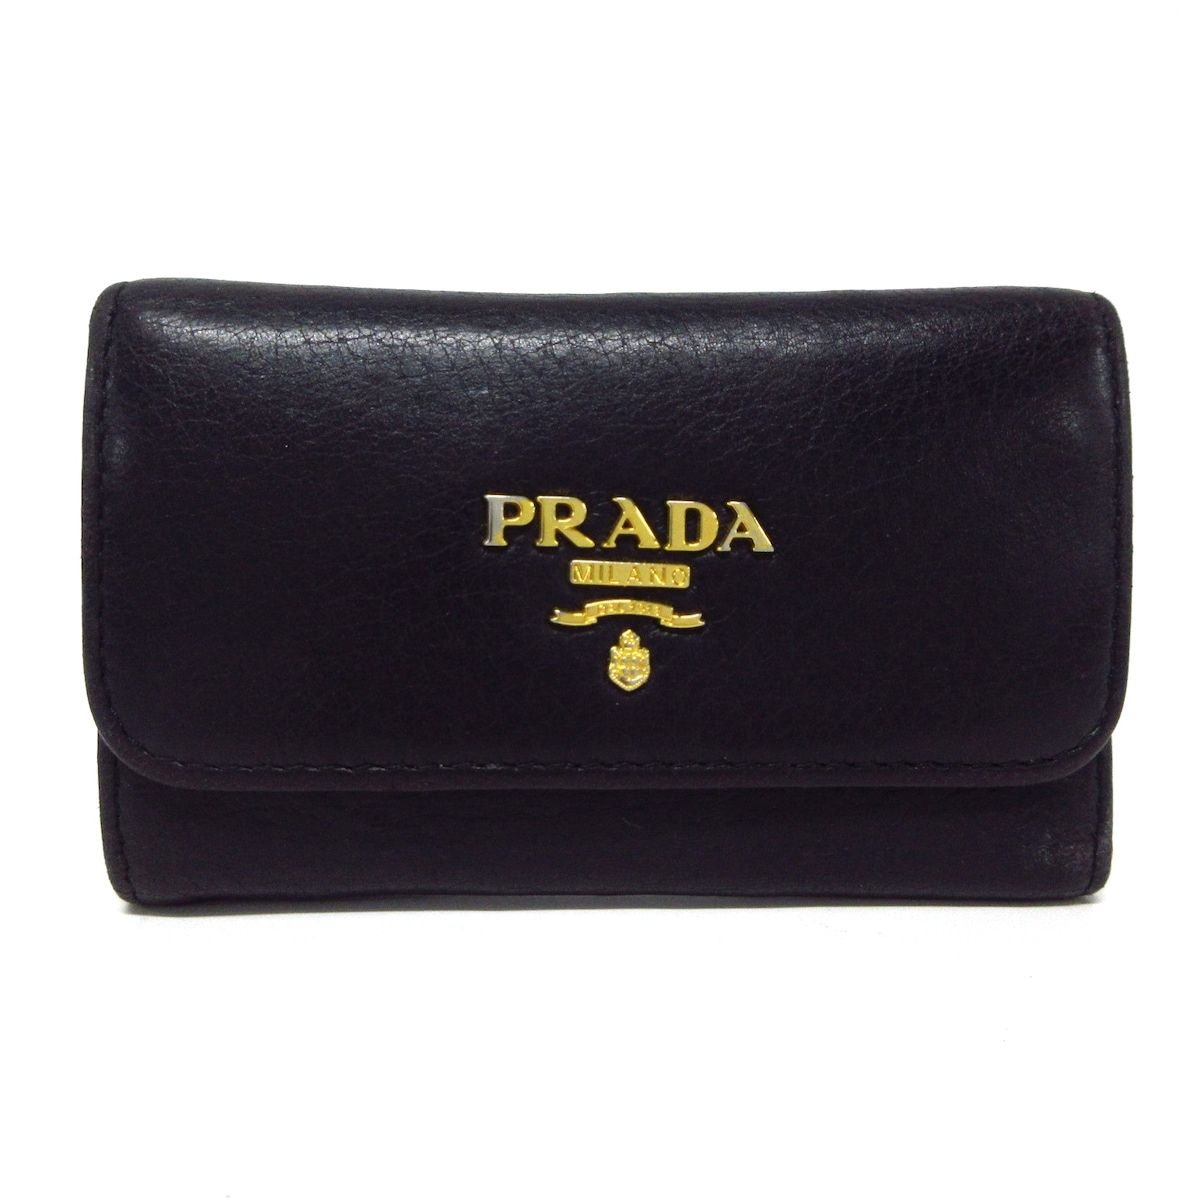 PRADA(プラダ) キーケース - 黒 6連フック レザー - メルカリ